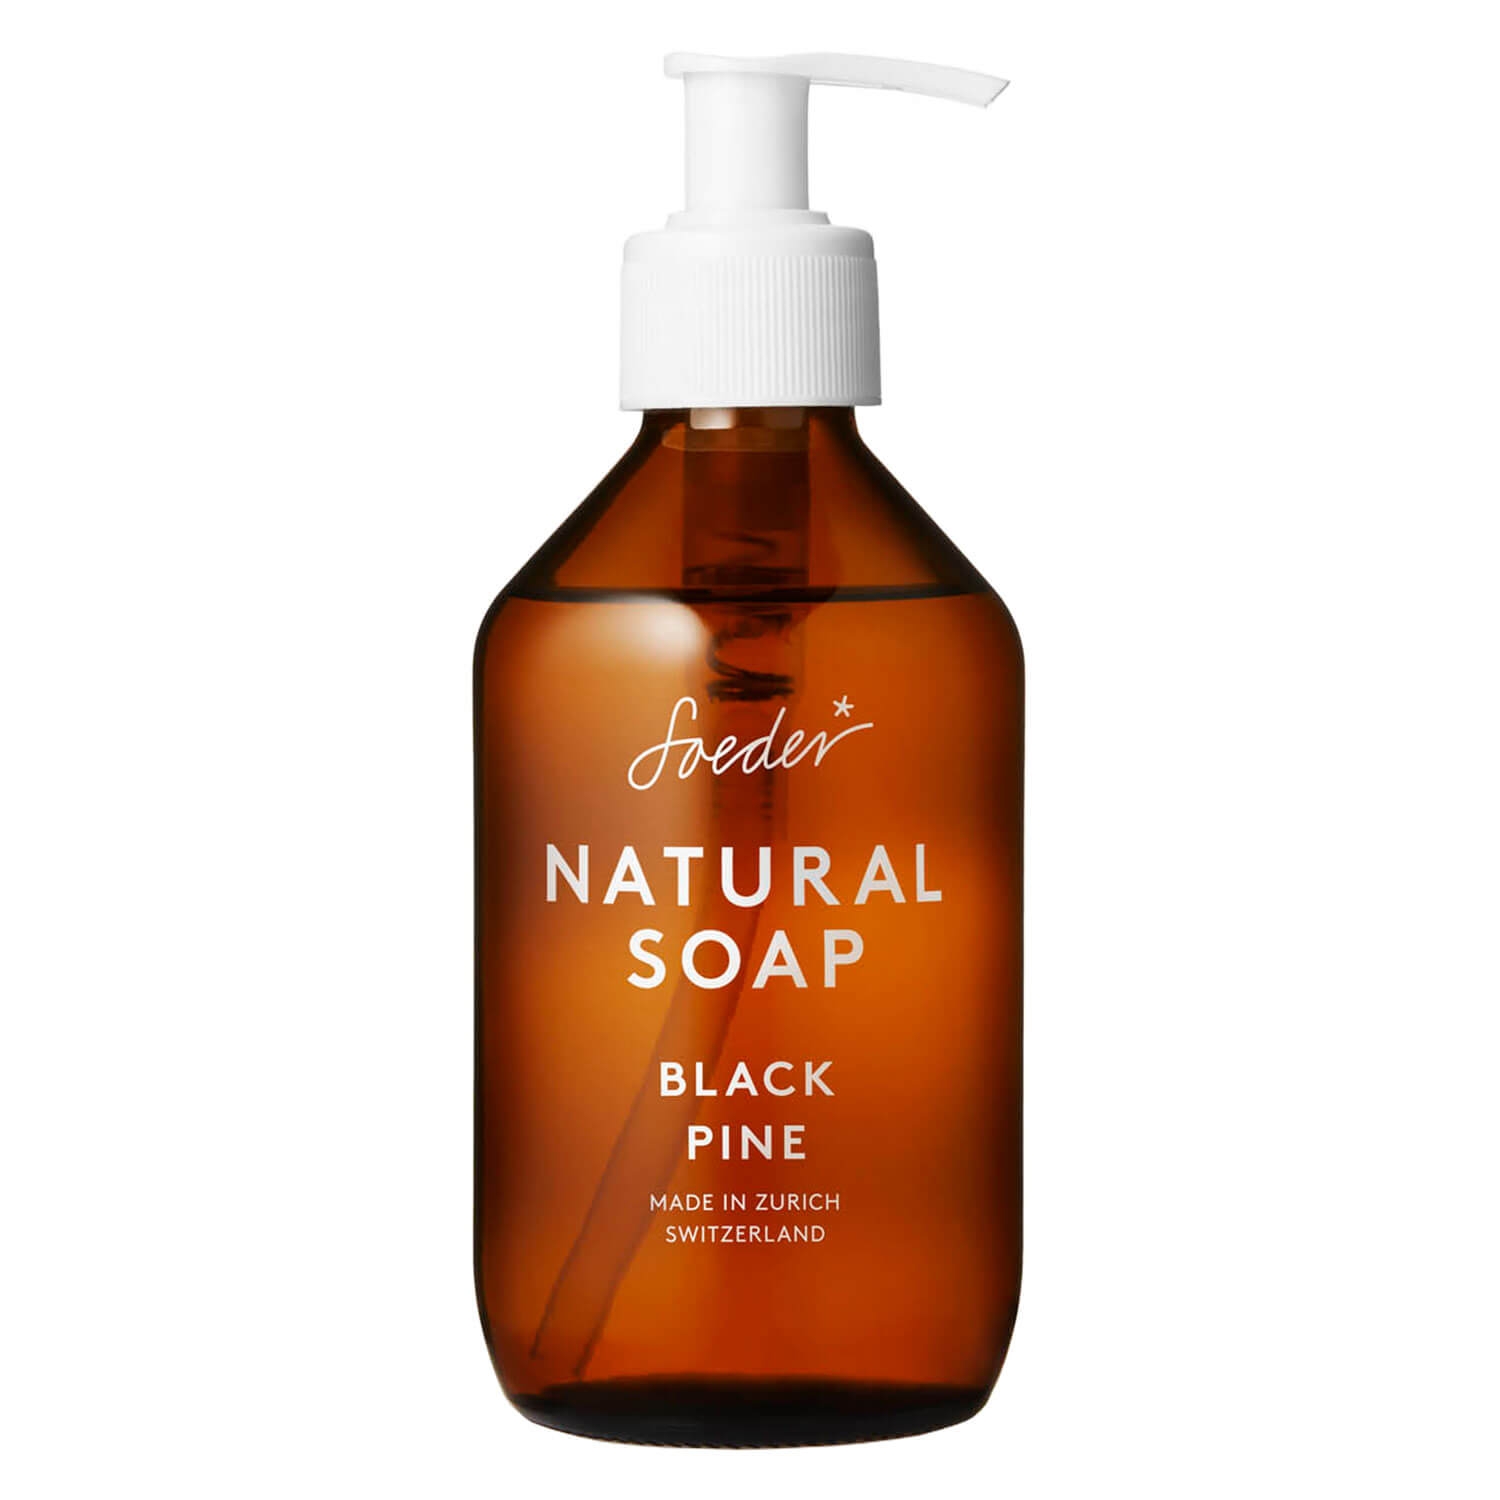 Produktbild von Soeder - Natural Soap Black Pine